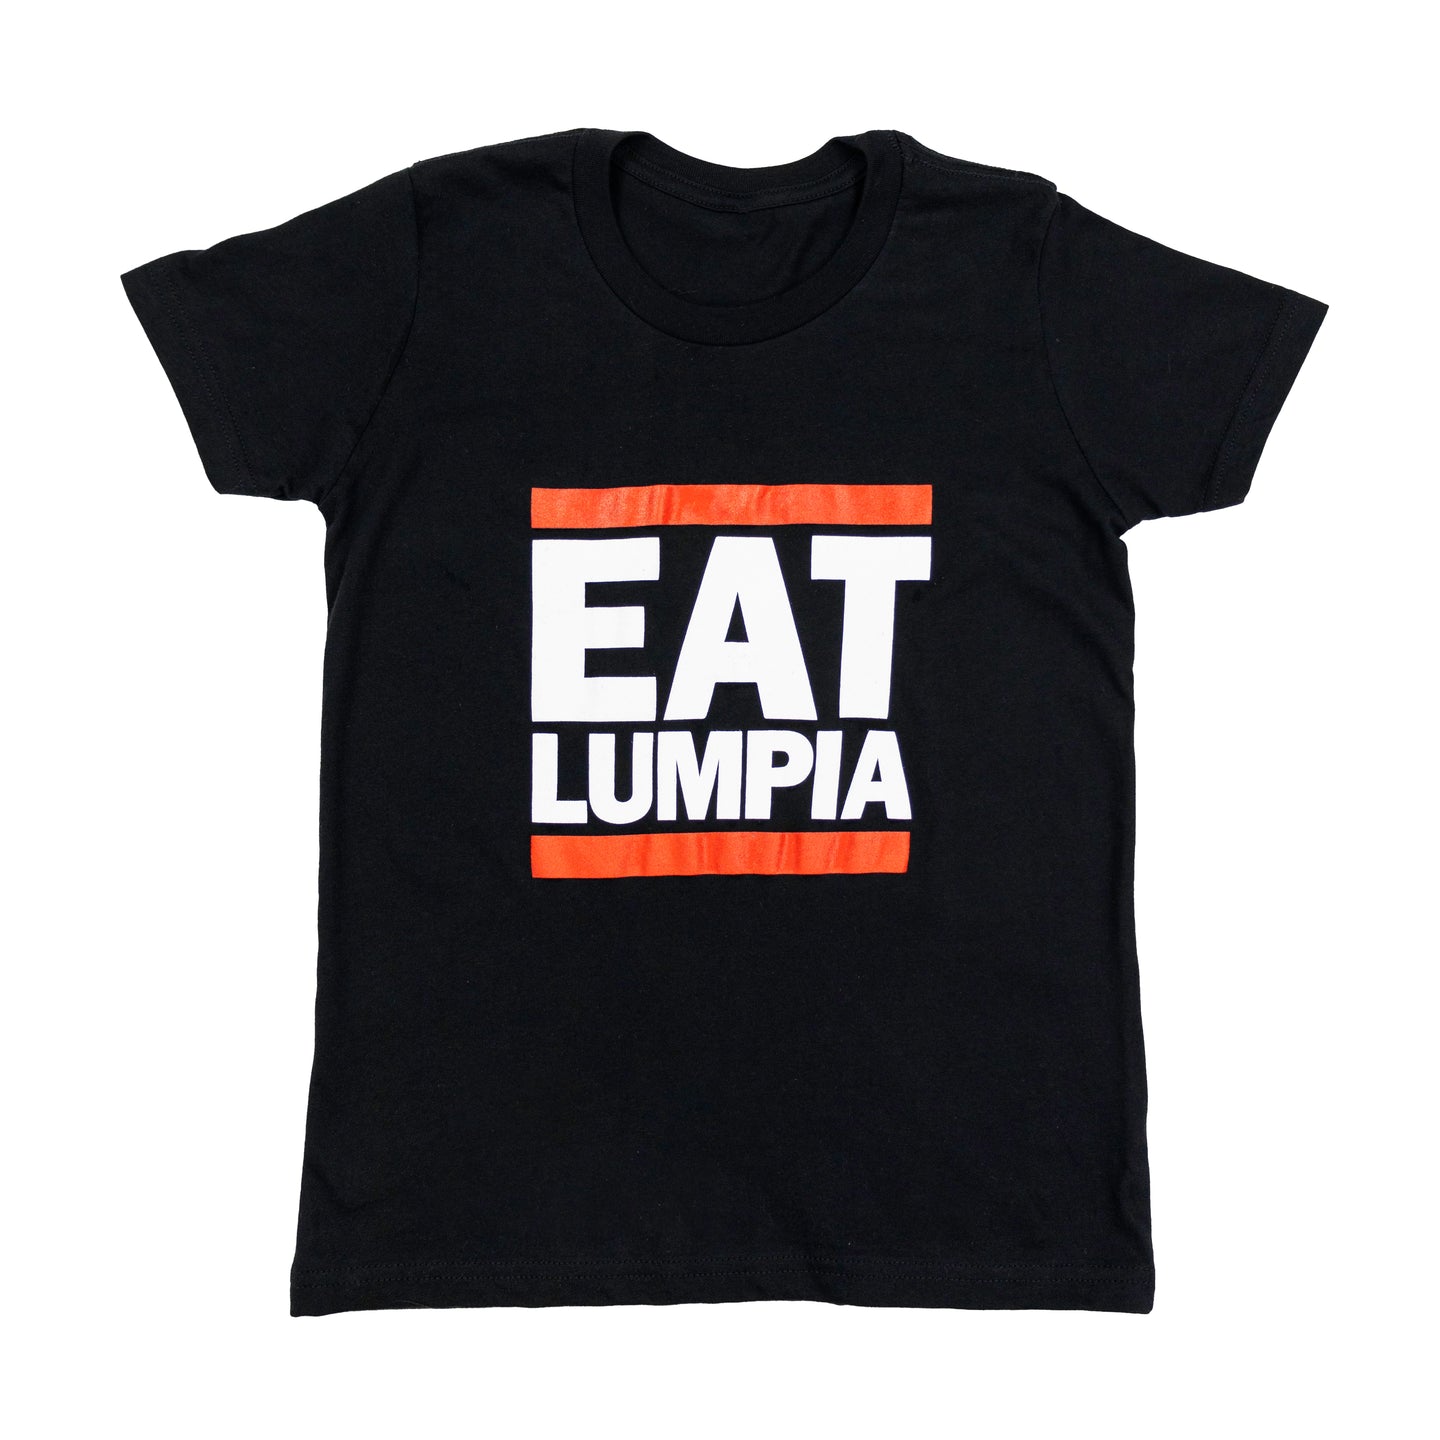 EAT LUMPIA YOUTH T-SHIRT